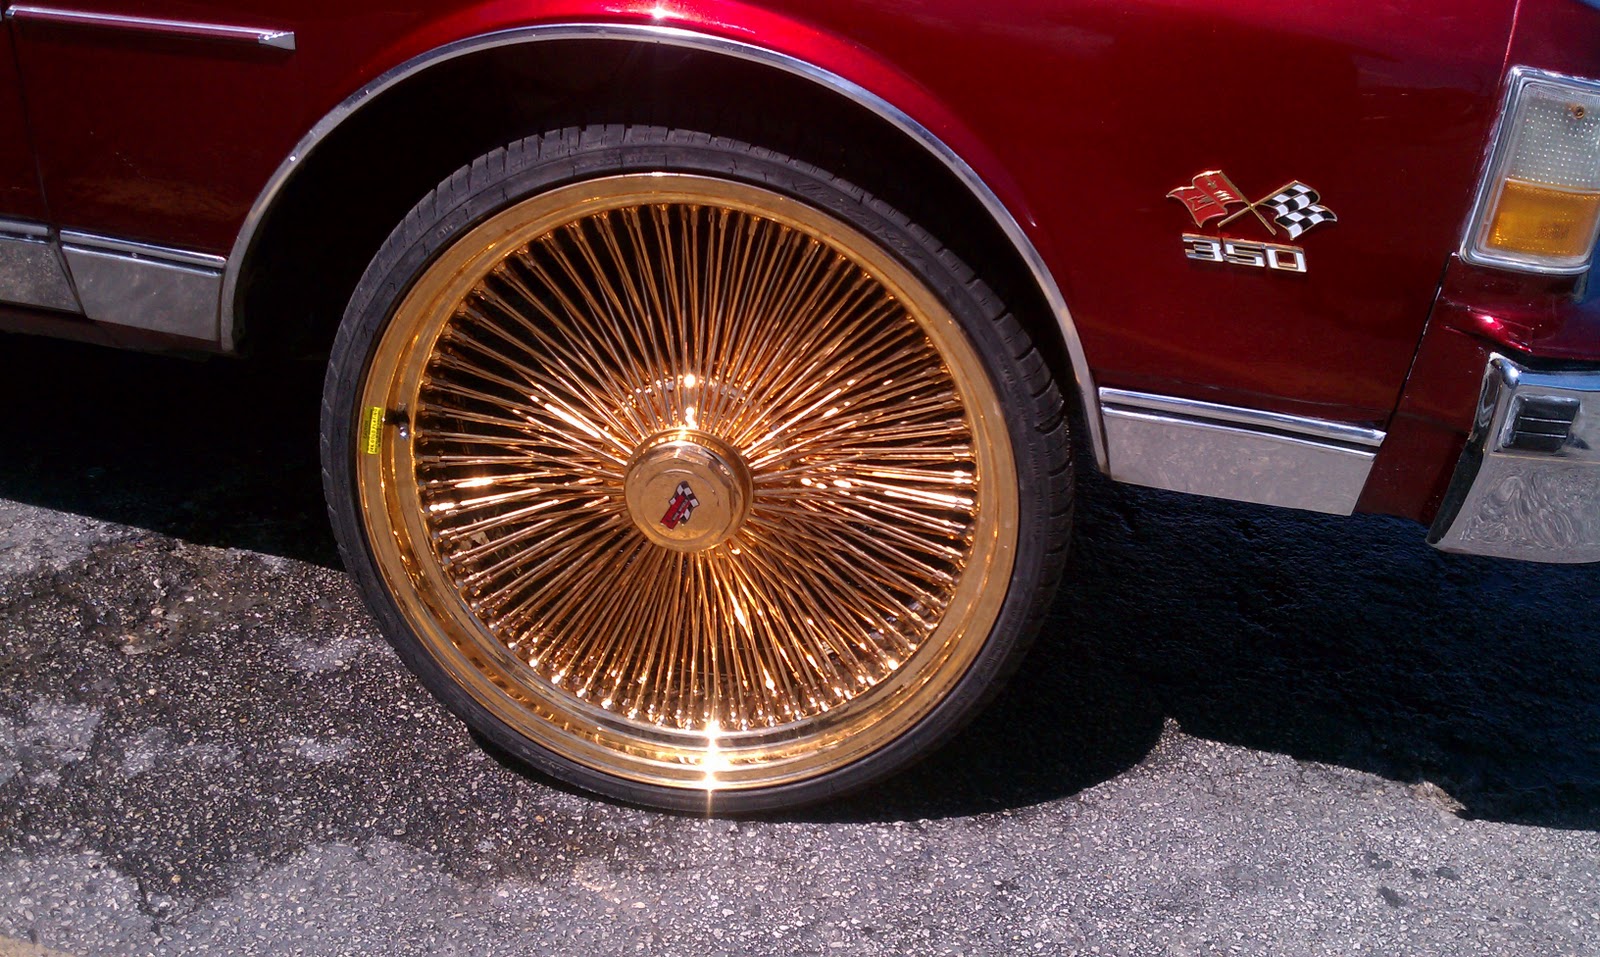 24 inch dayton rims for sale - 🧡 Комплект колес 26 дюймов на 144 спиц - К....